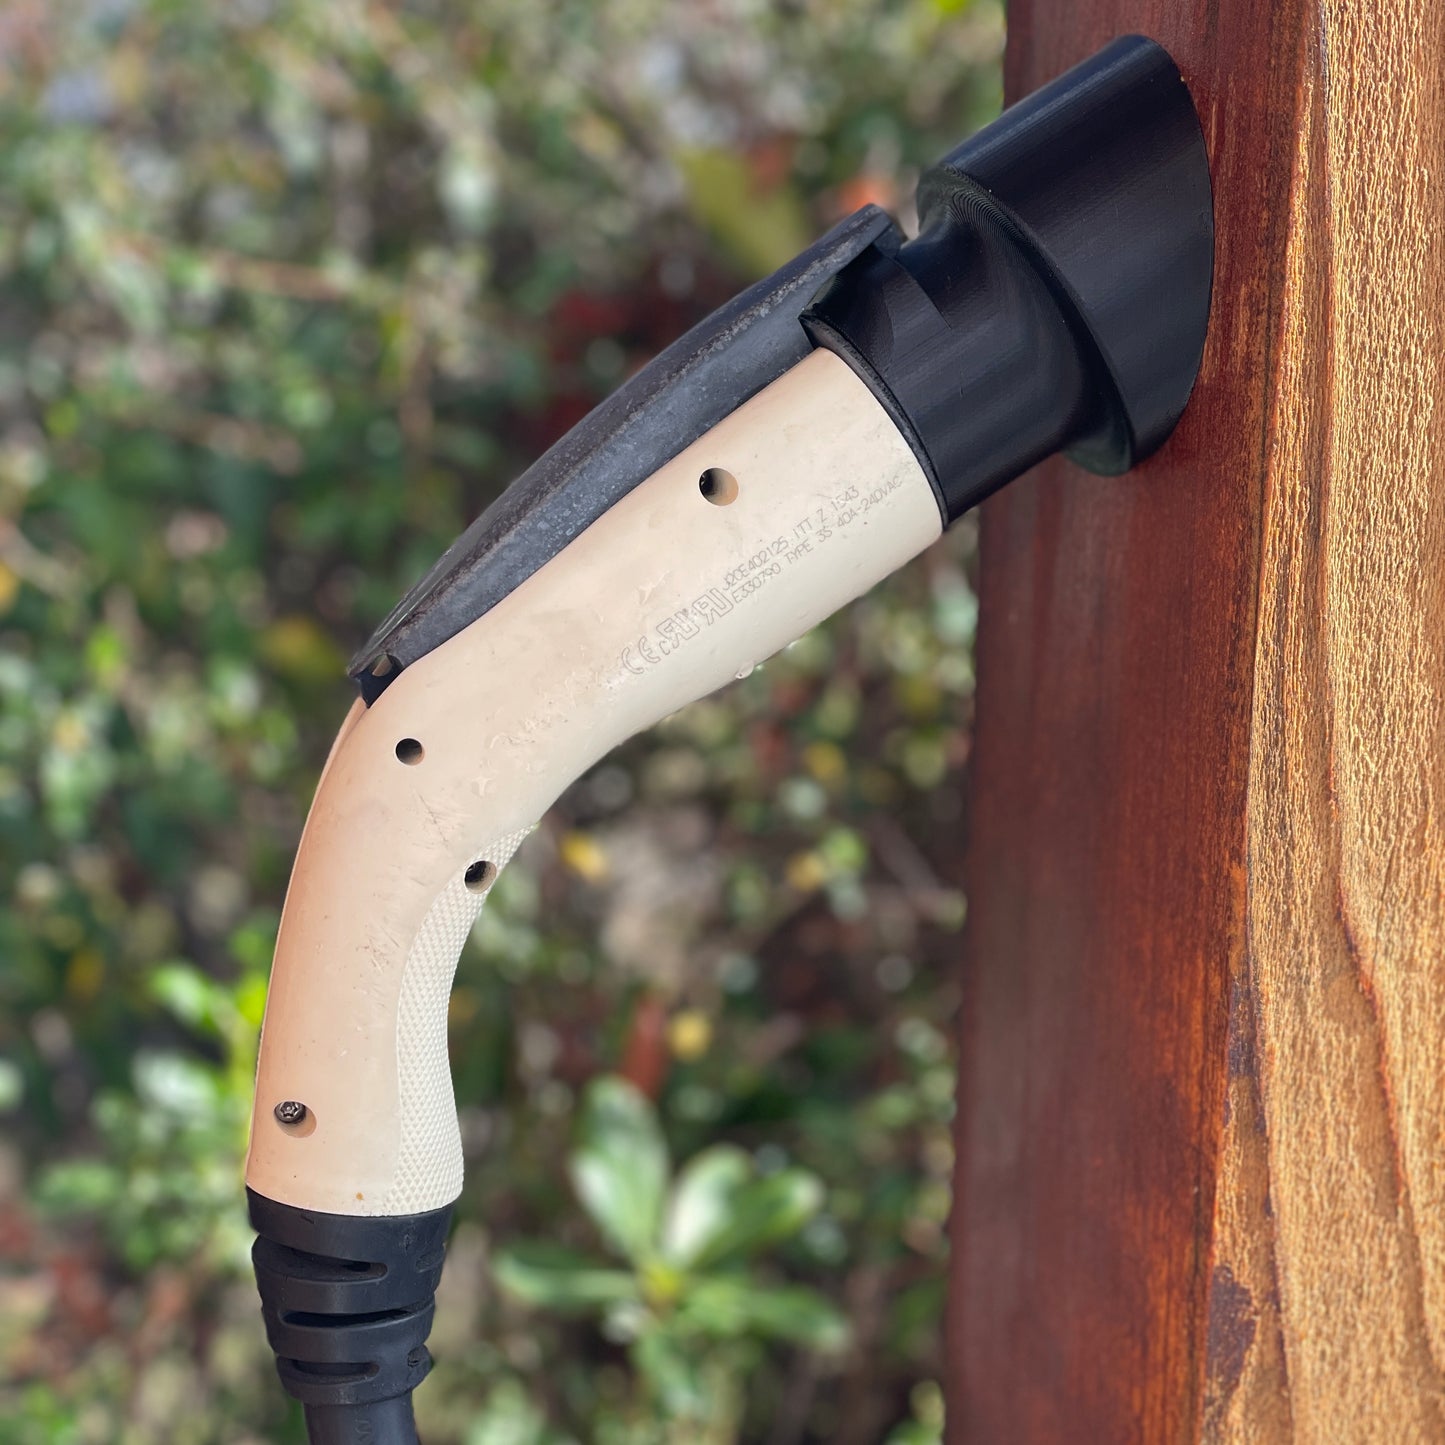 EV Charging Plug Holder / Dock / Hanger for J1772 plugs - Simple and Minimal Accessory